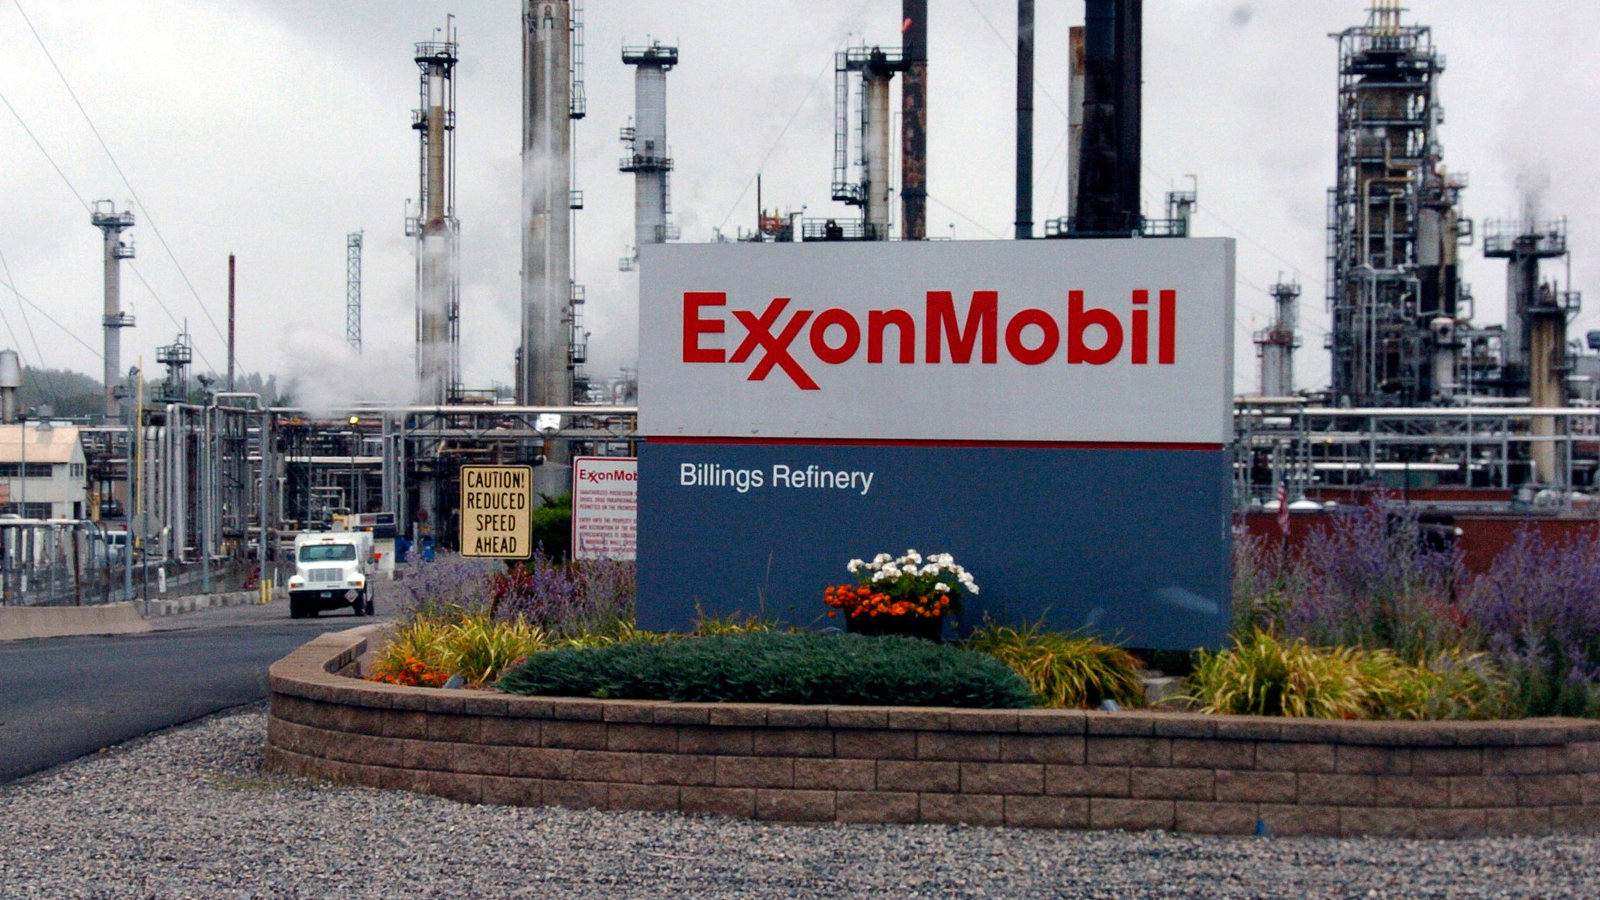 Inside ExxonMobil: Exploring World's Largest Energy Corporation